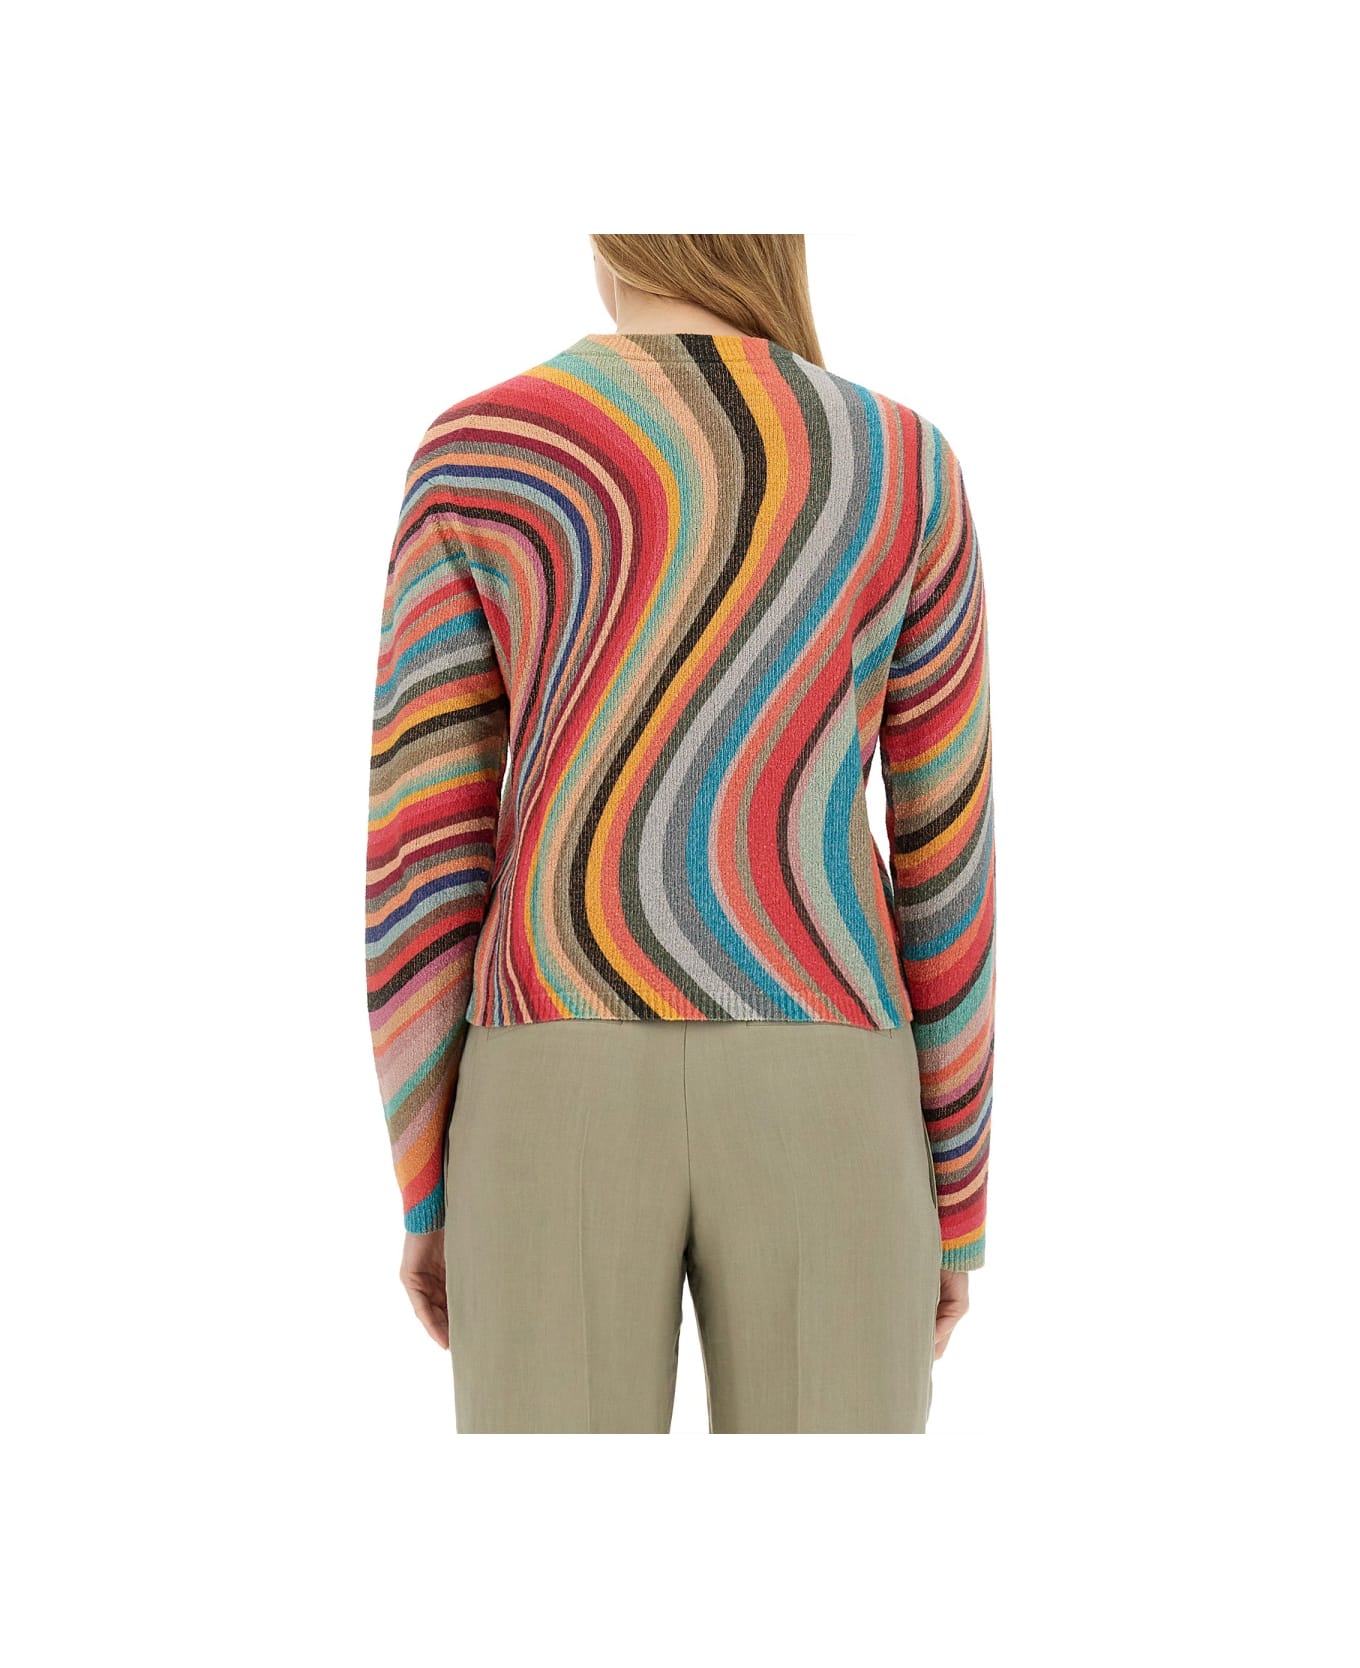 Paul Smith 'swirl' Shirt - Multicolor ニットウェア